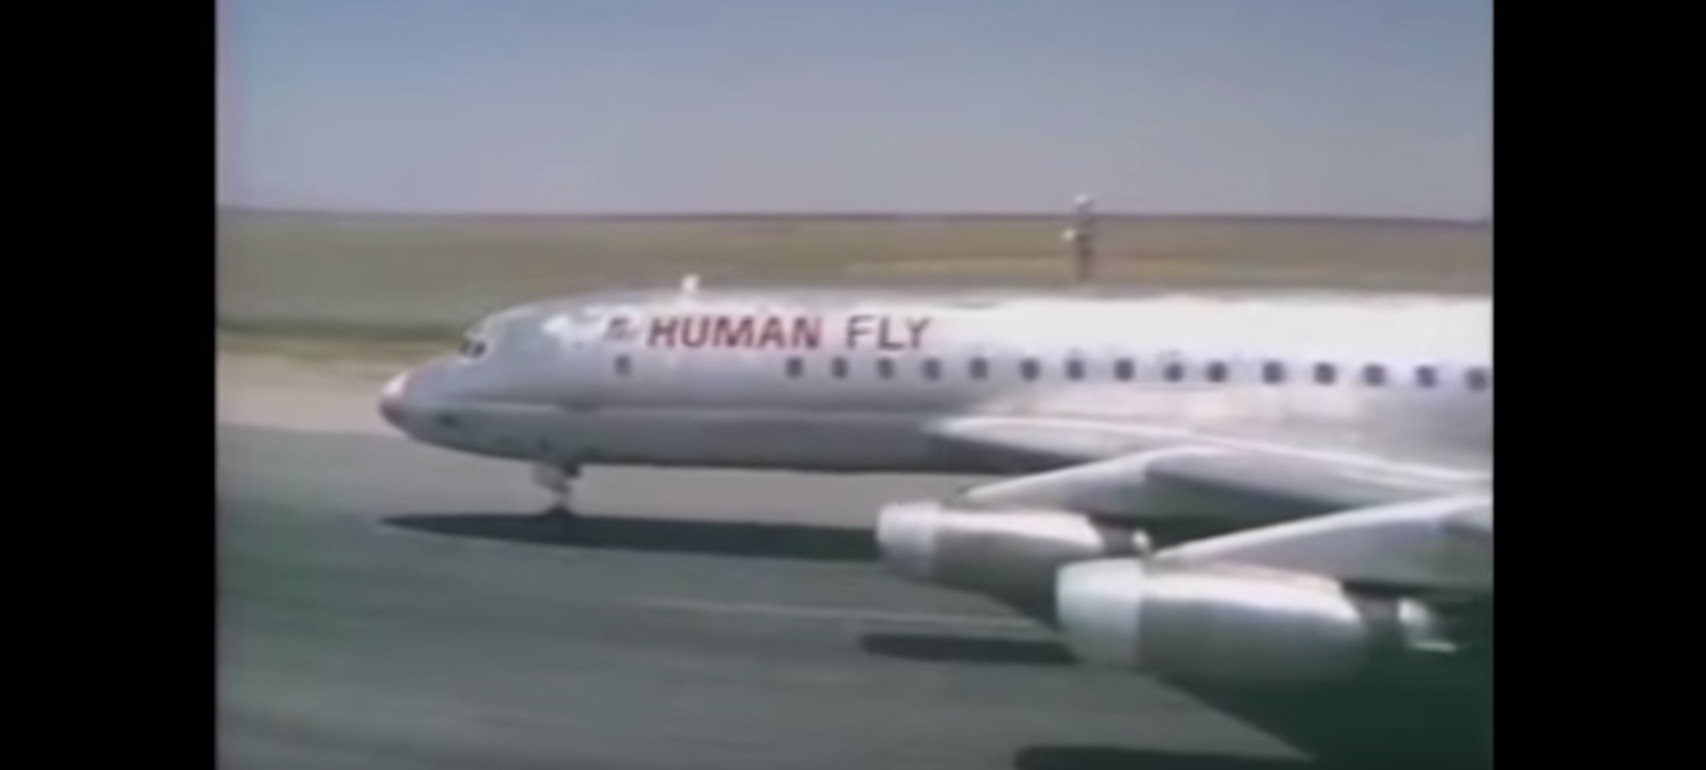 Humanfly - a crazy DC-8 stunt film